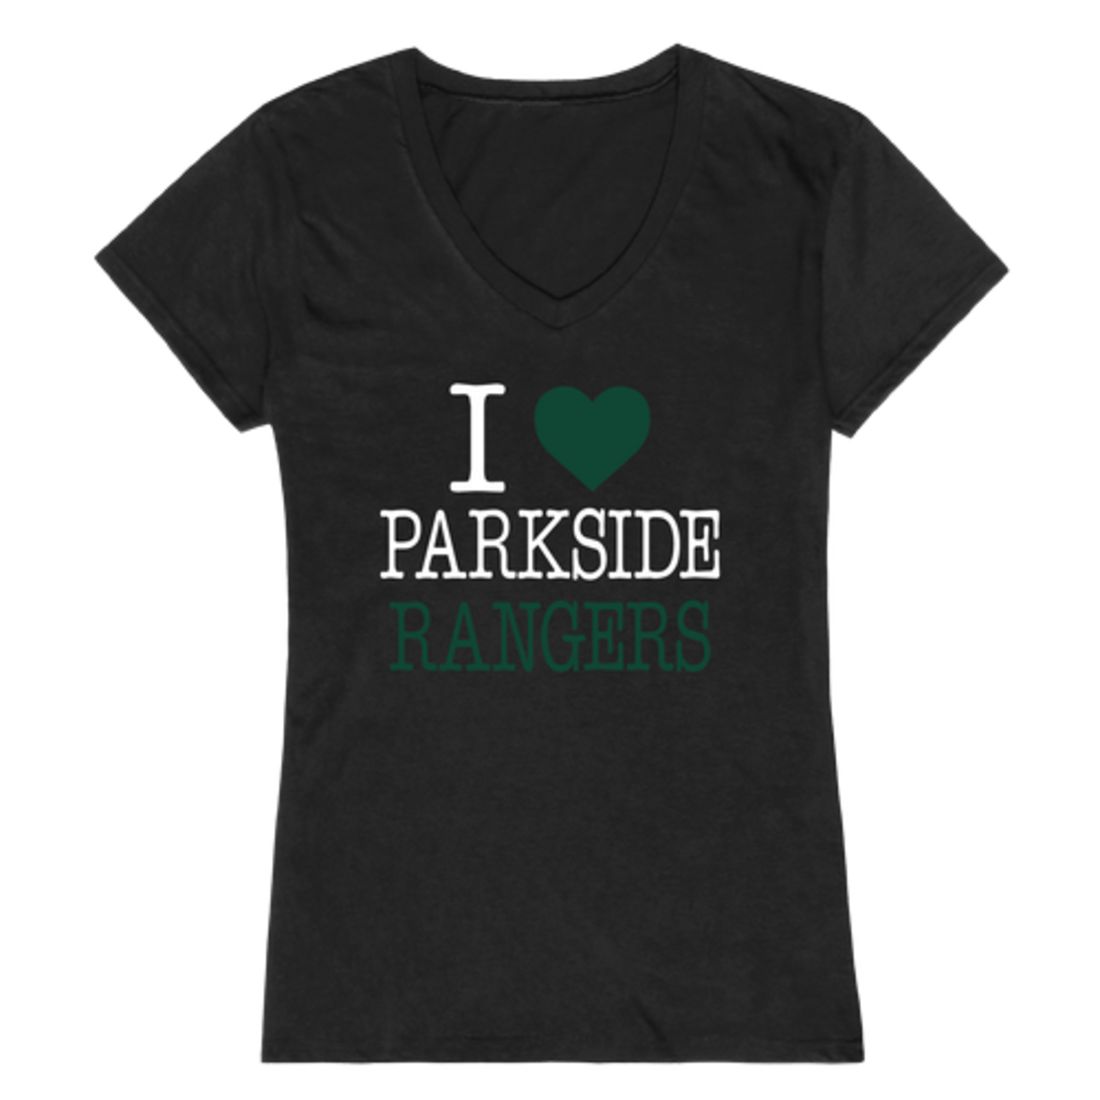 I Love University of Wisconsin-Parkside Rangers Womens T-Shirt Tee